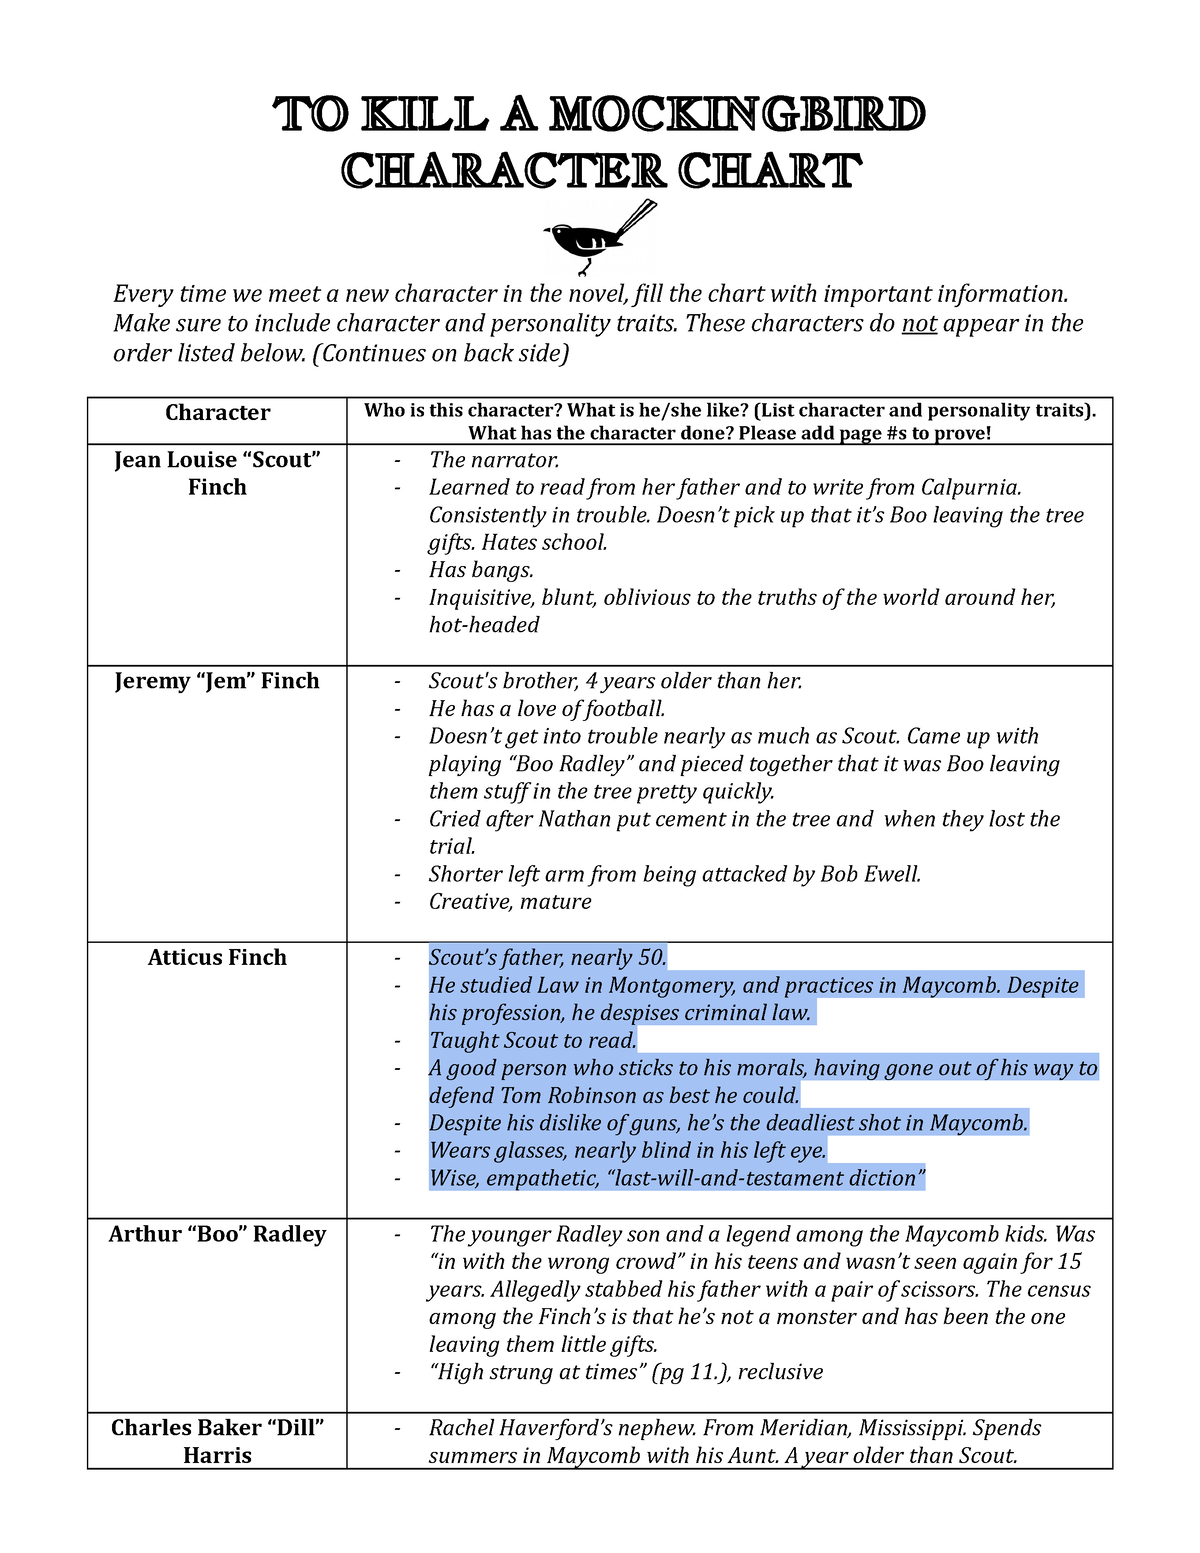 To Kill a Mockingbird Scouts Character Development Free Essay Example